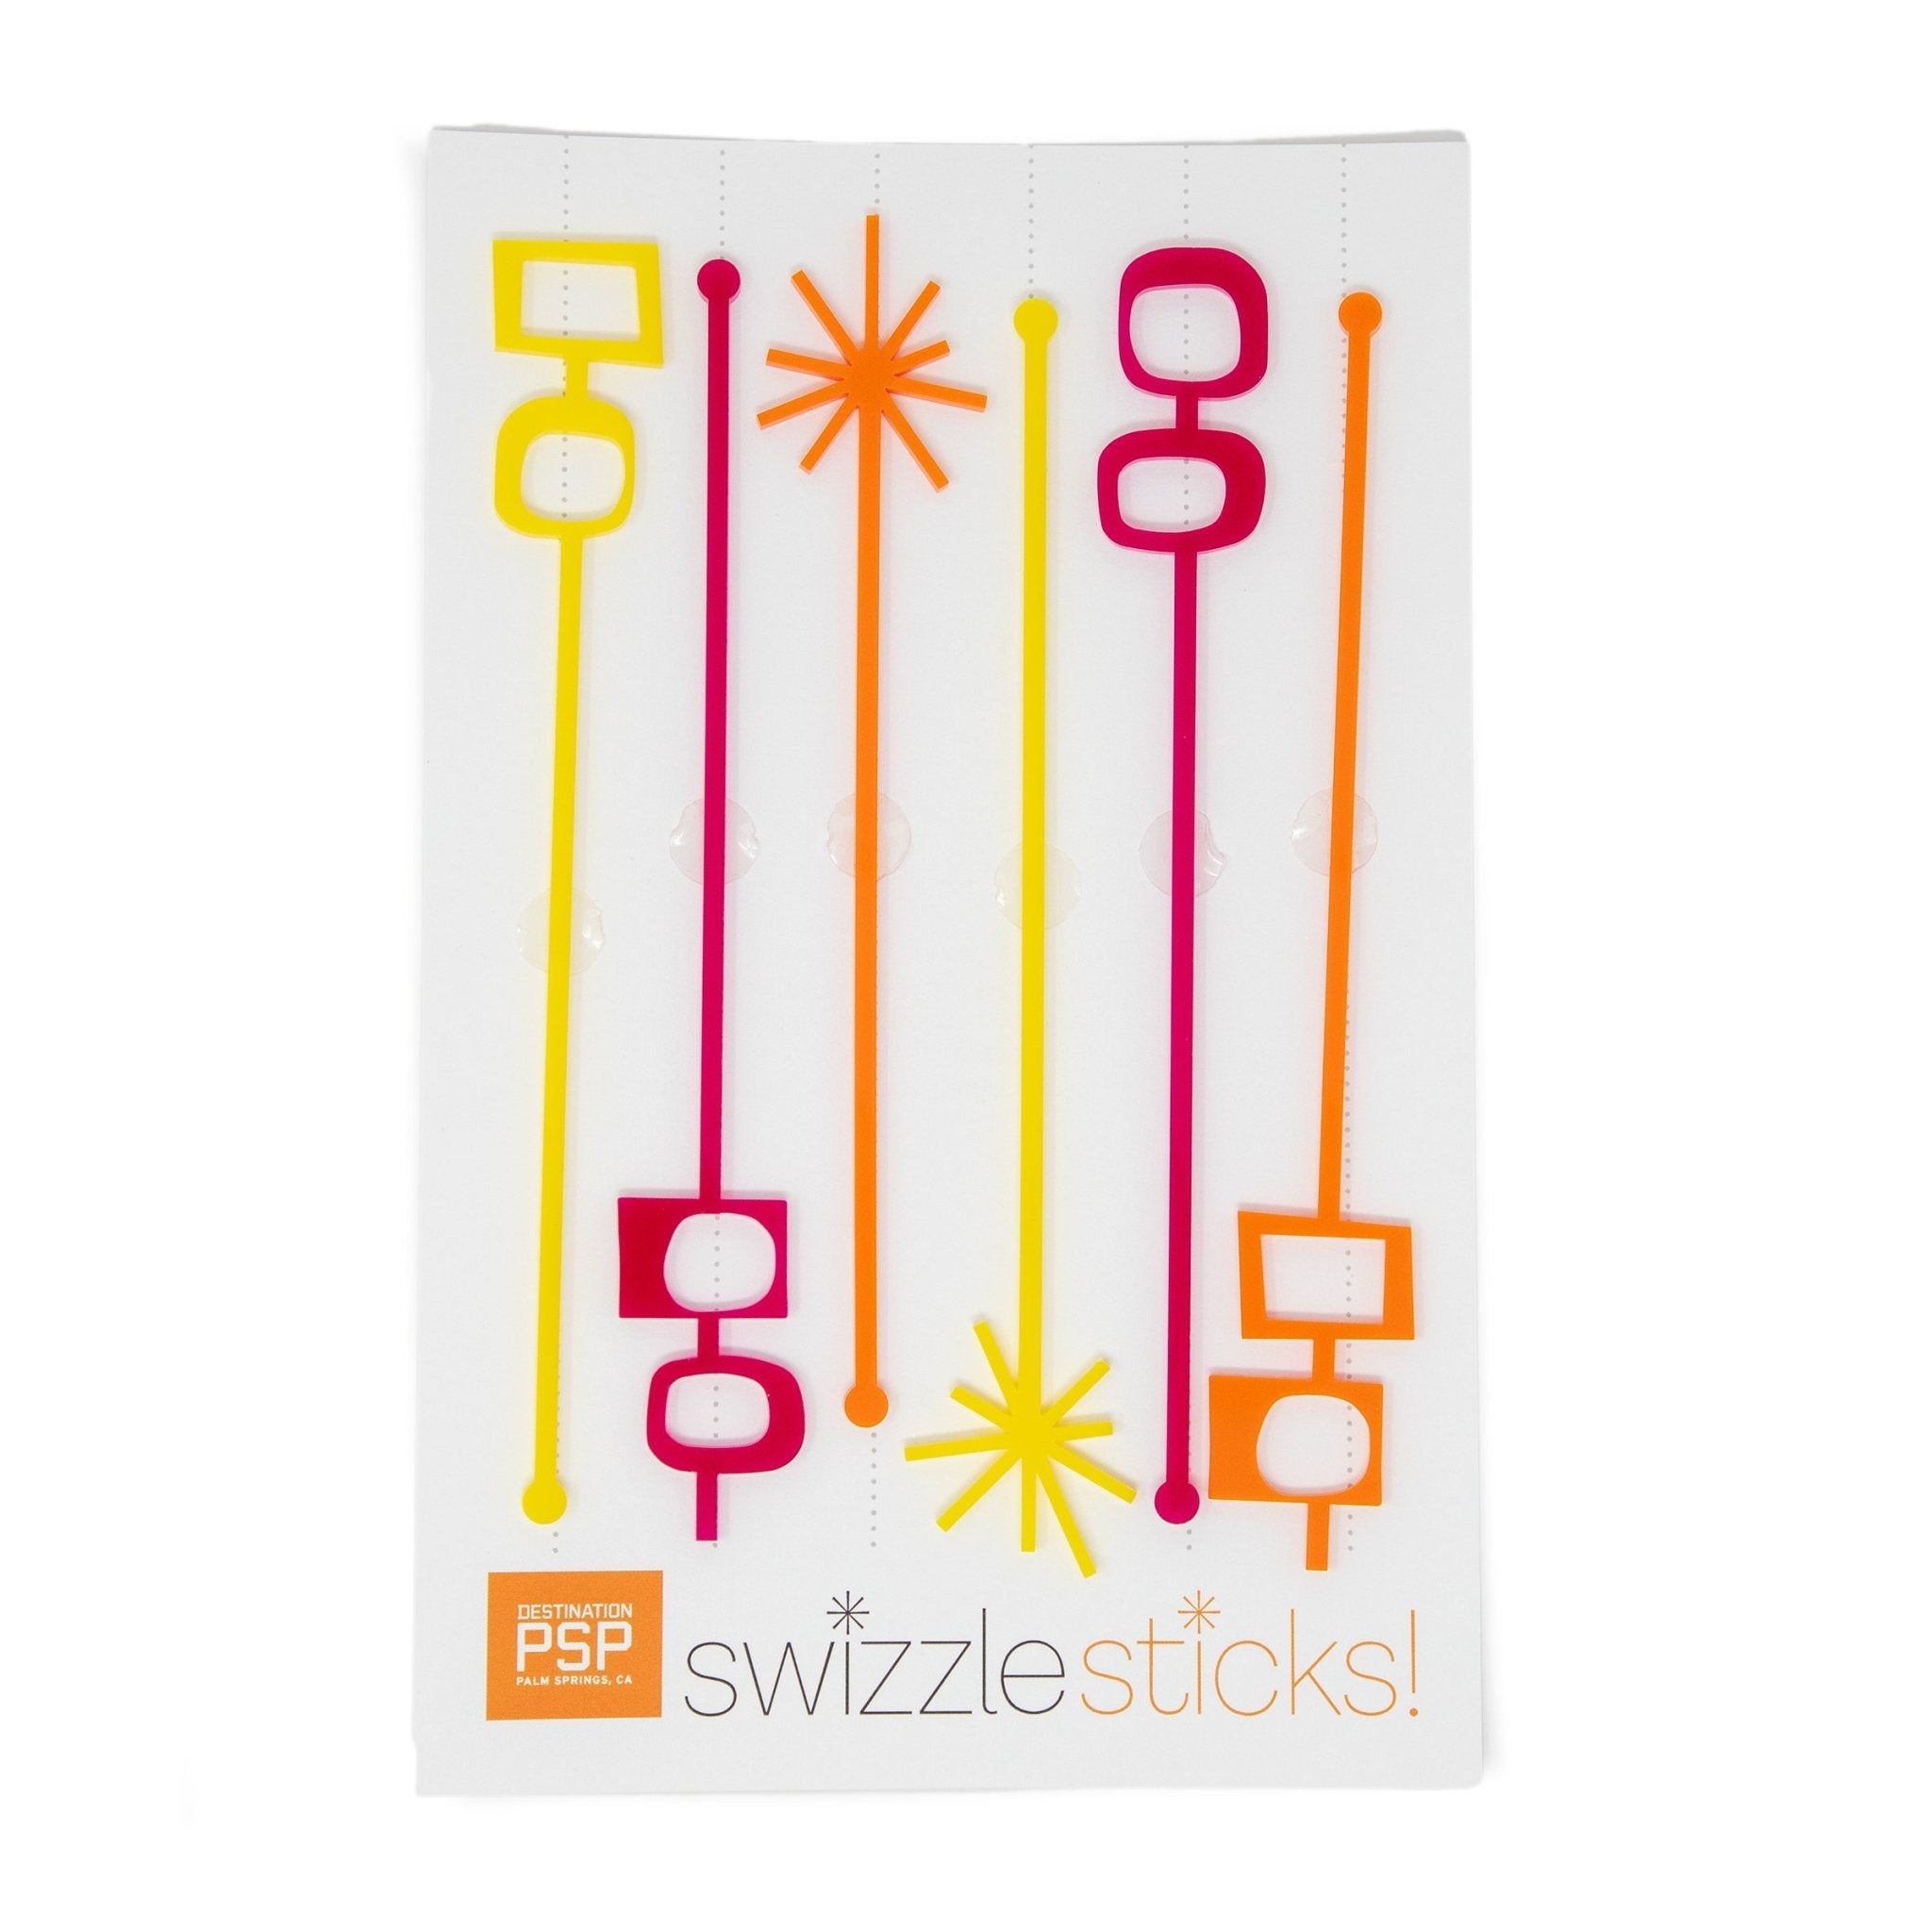 Swizzle Stick Set - Atomic Orange Yellow - Destination PSP